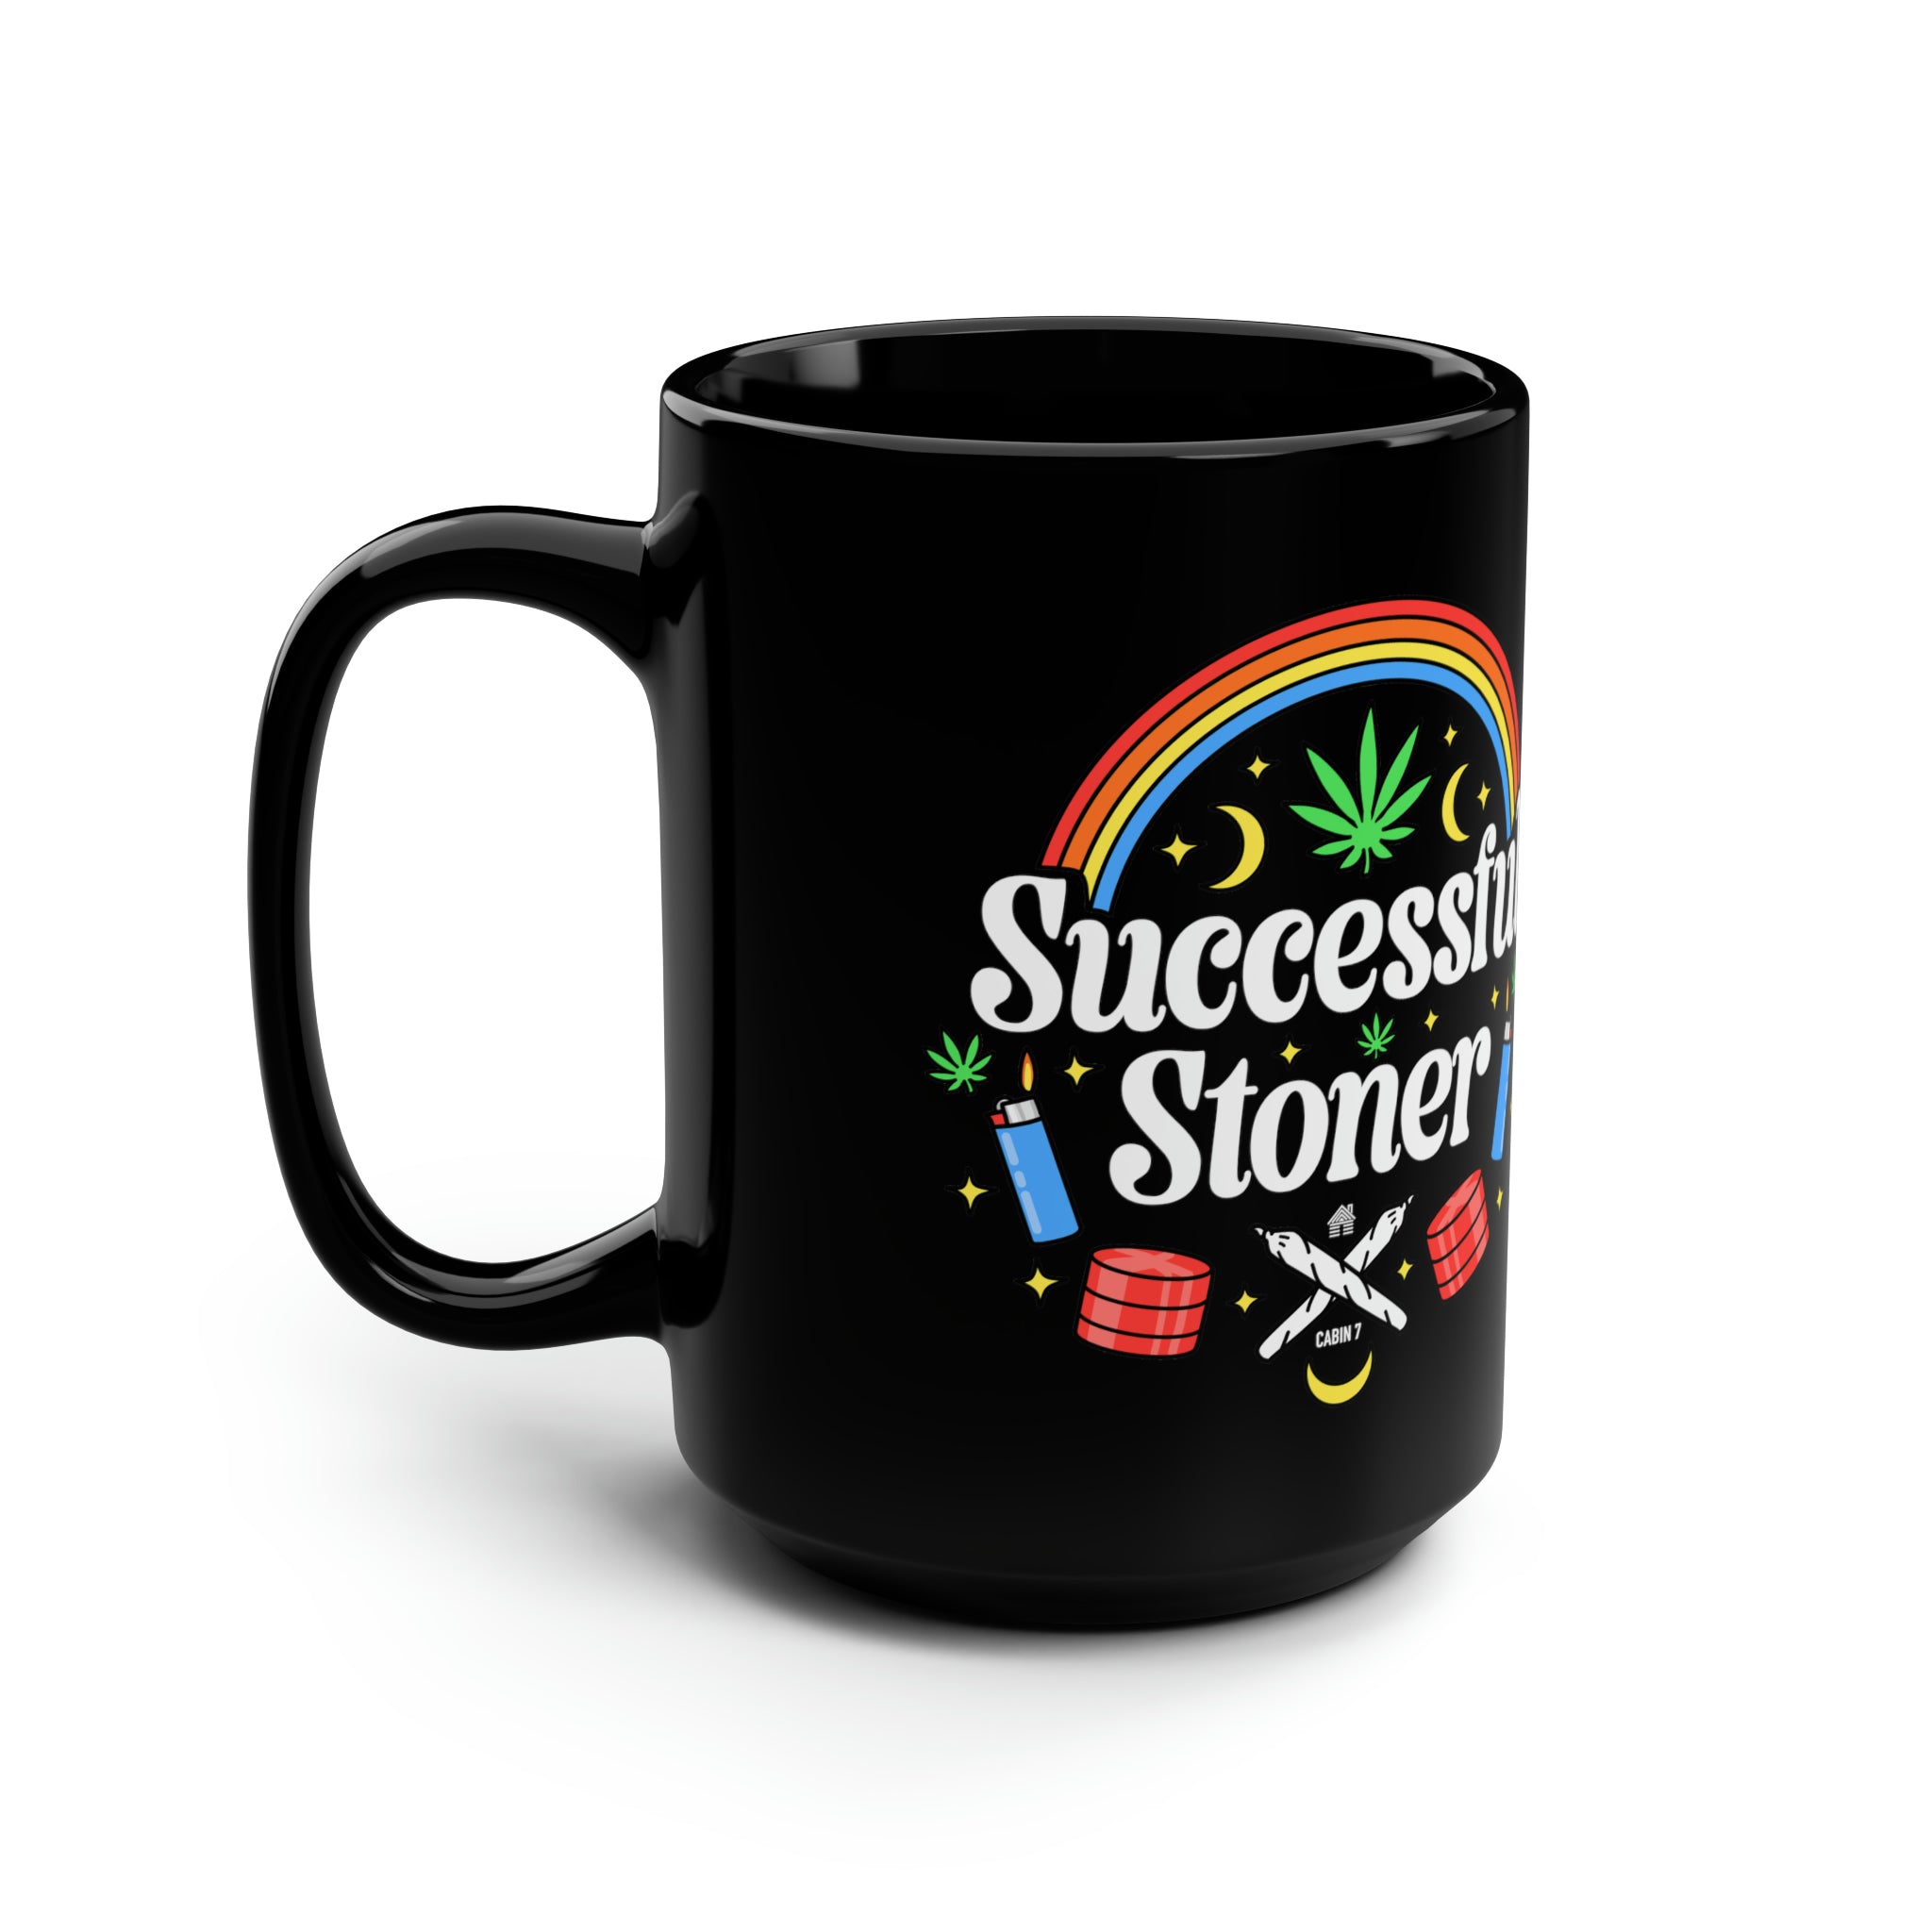 Successful Stoner Mug